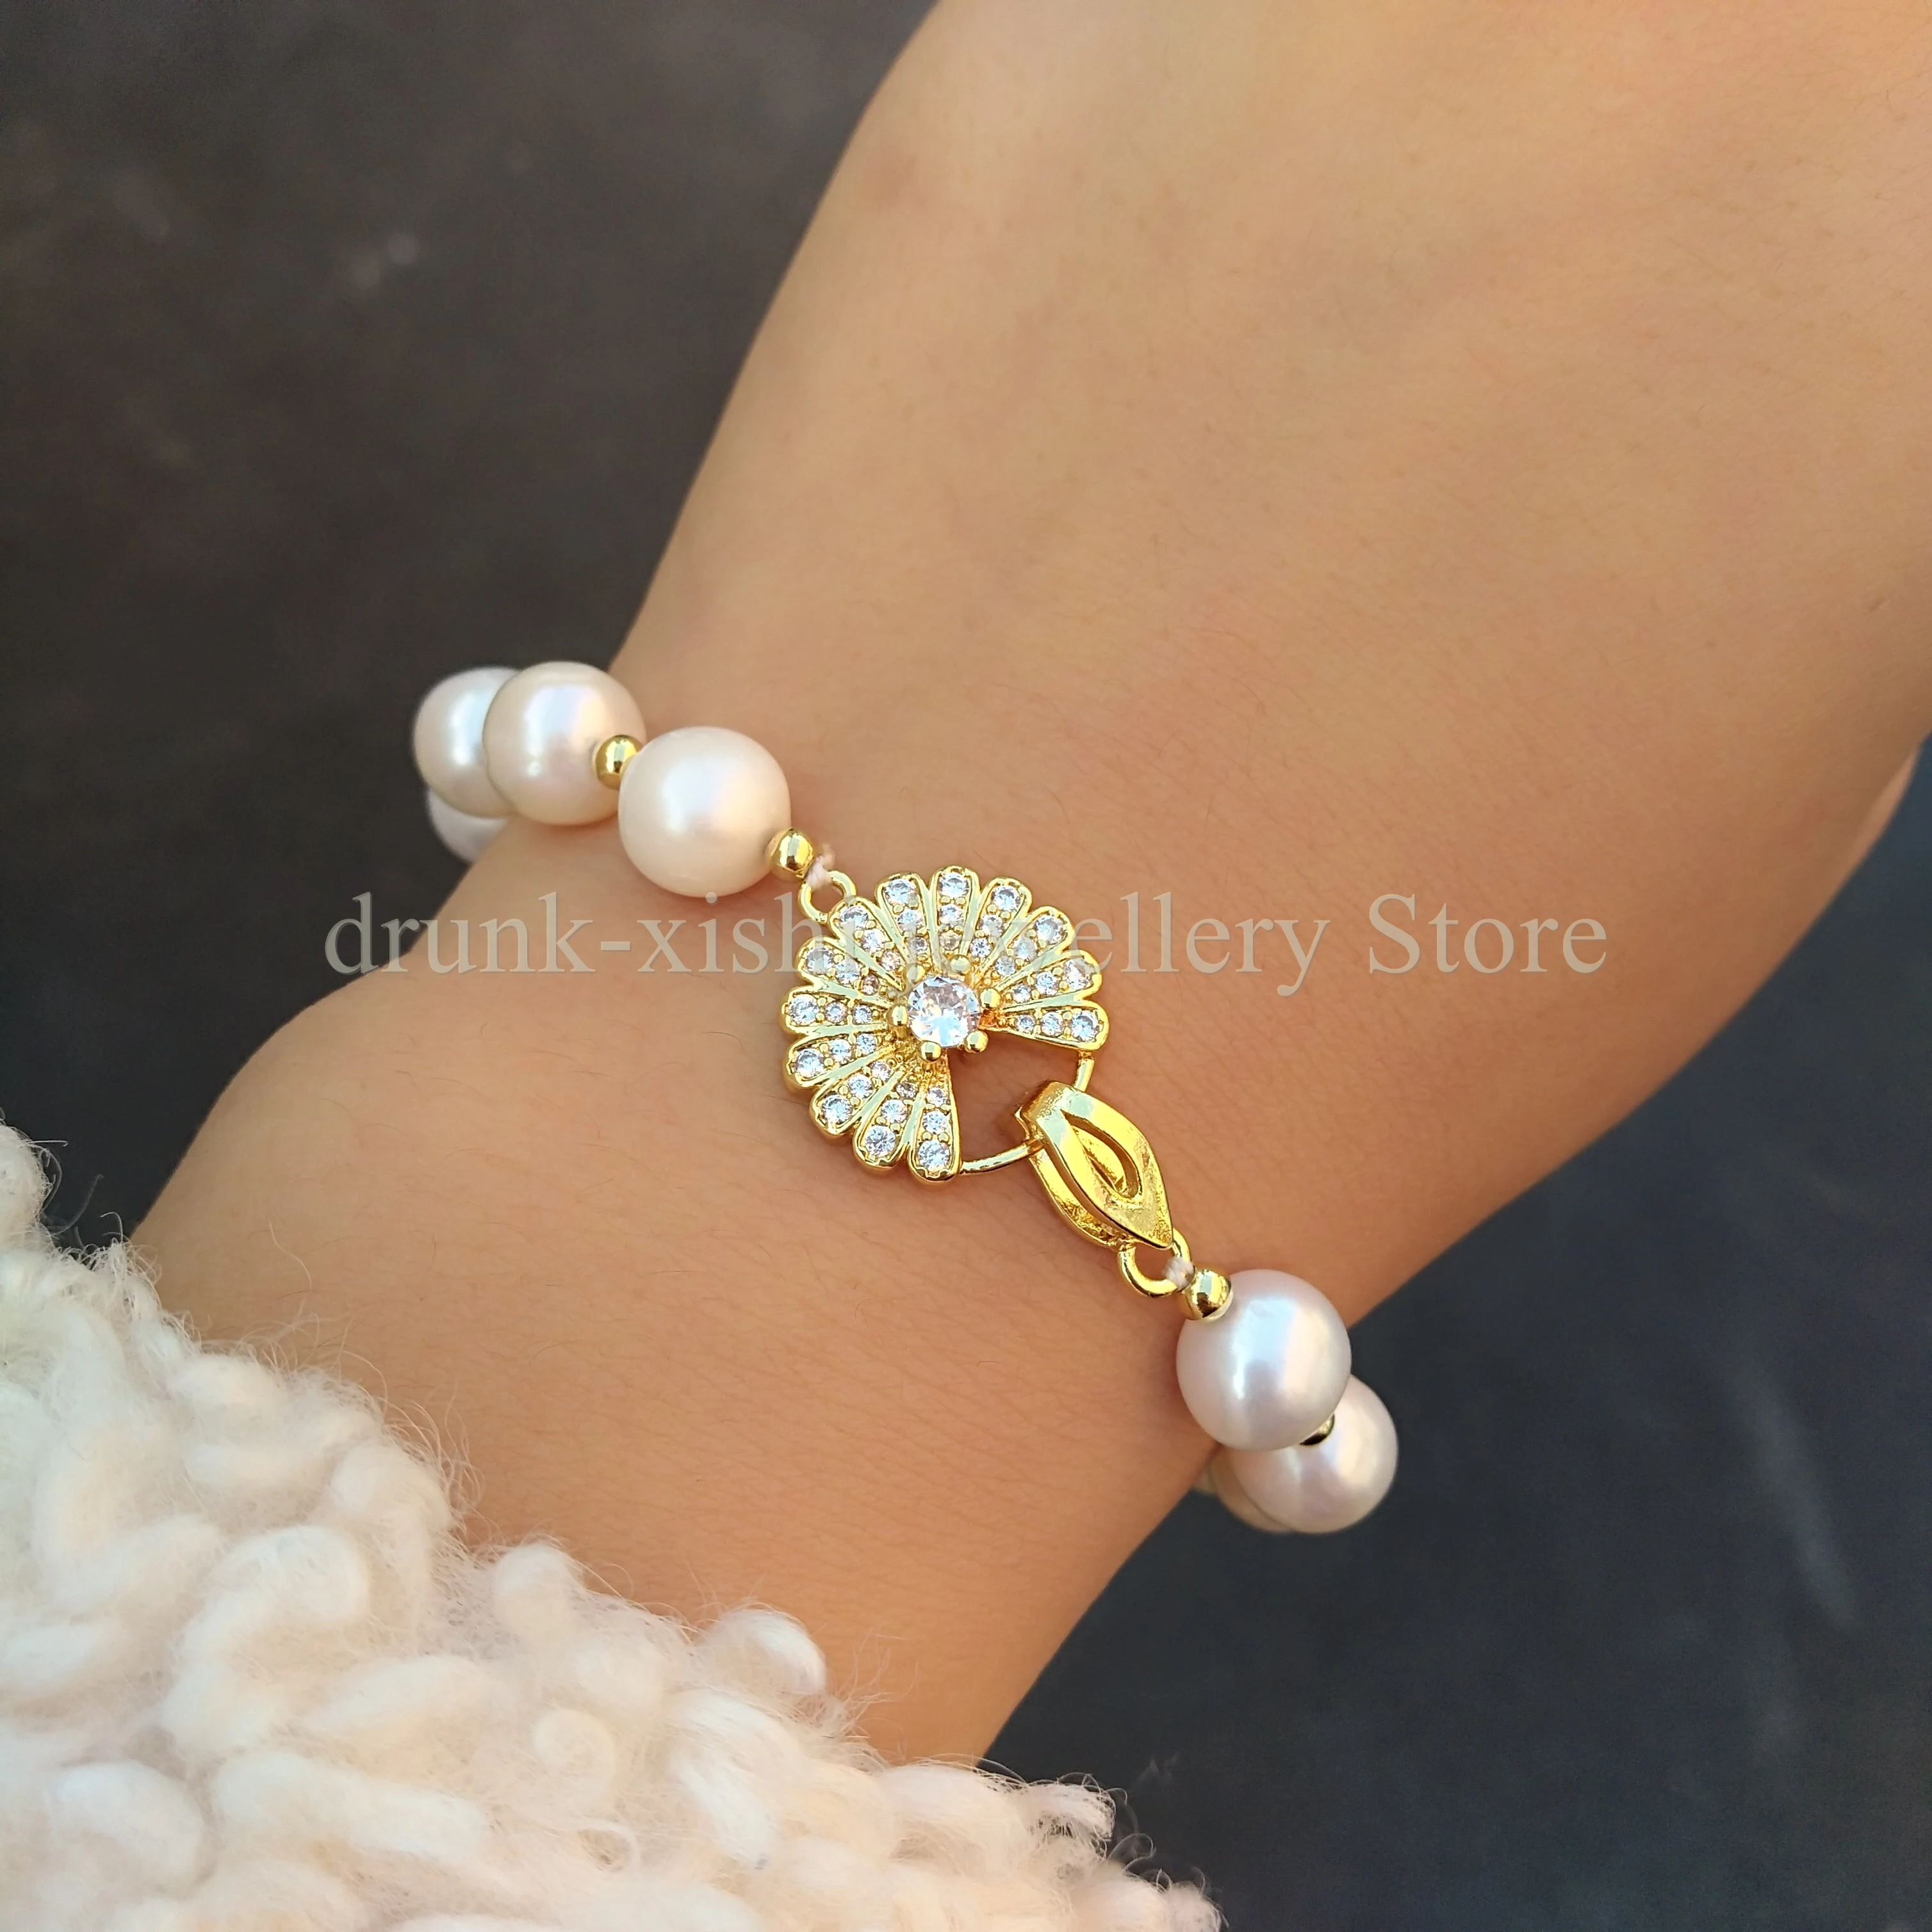 Freshwater Pearl Bracelet Mother of Pearl Bracelet 18K Gold Plated Shell  Pendant Adjustable Bracelet 6 8,3 Inch Gift Idea NONOSH - Etsy